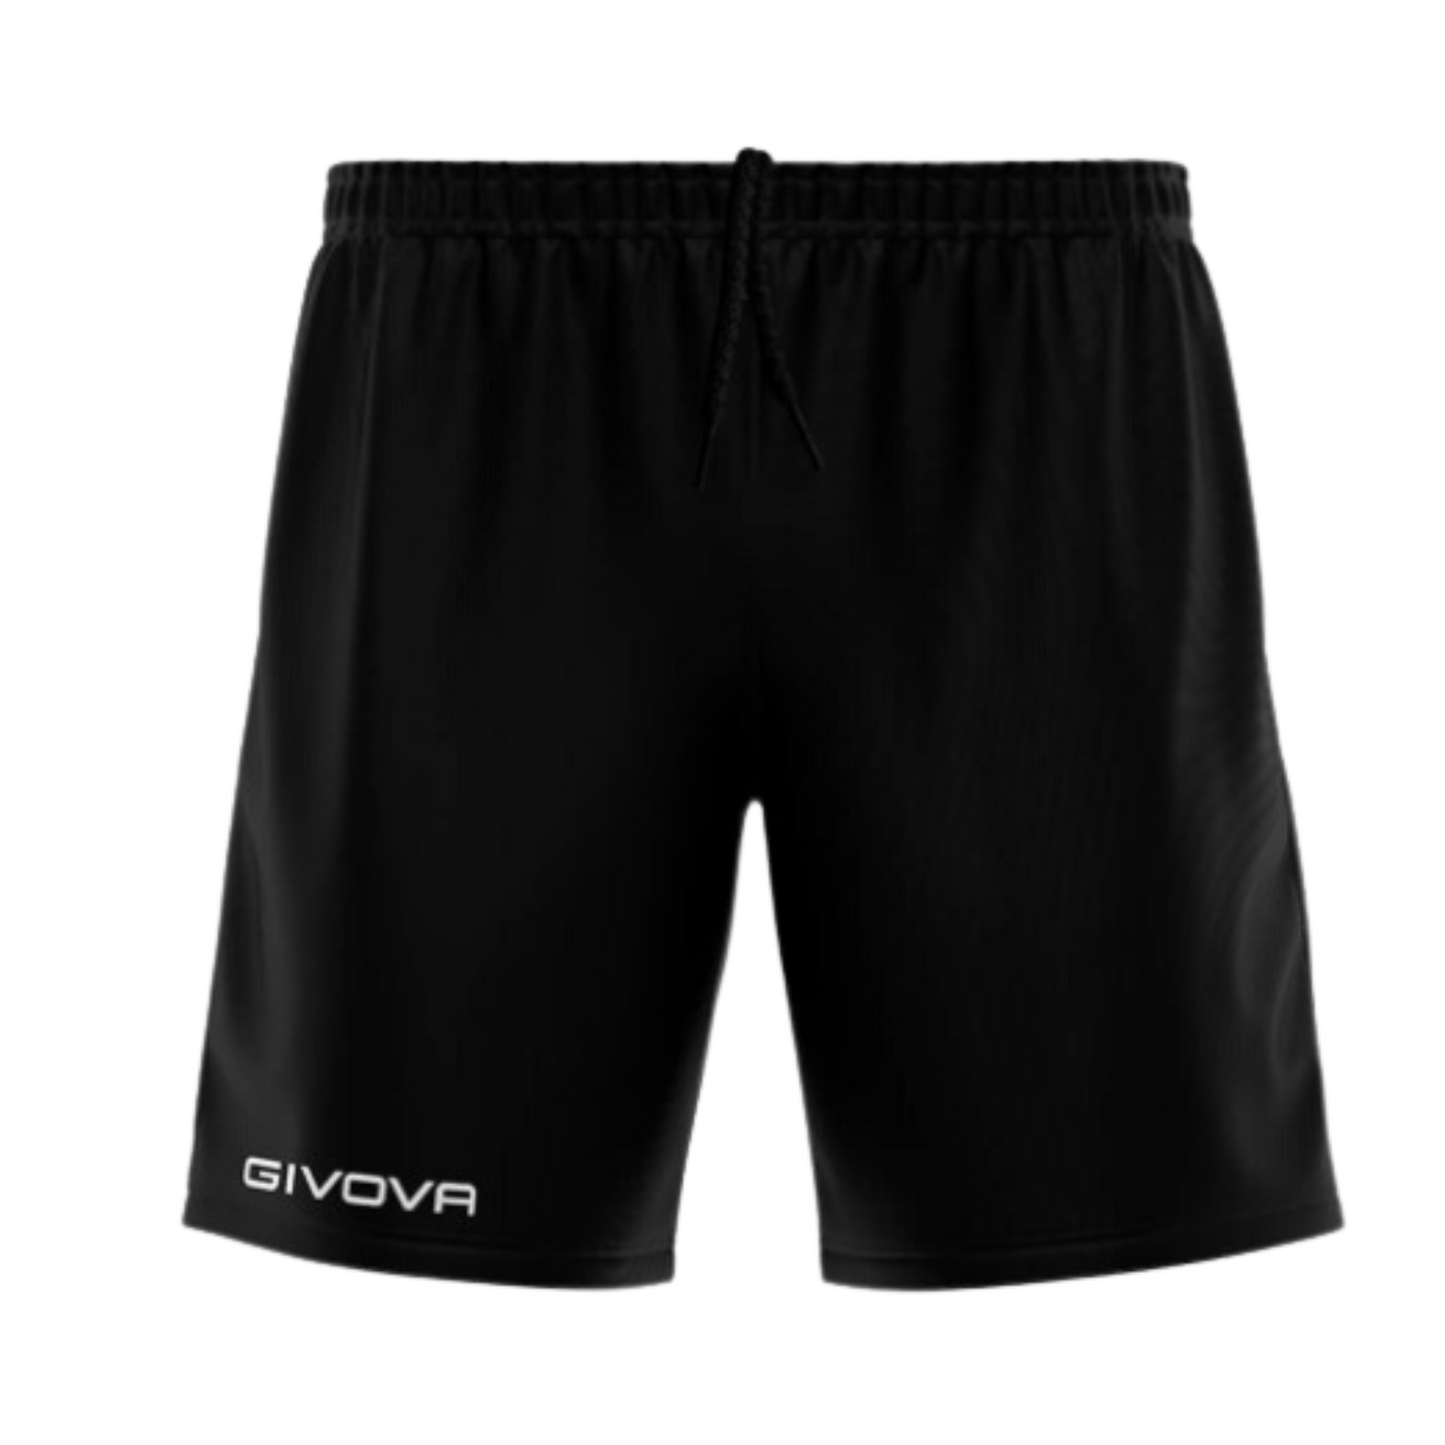 Givova One Training Shorts - ITASPORT TEAMWEAR